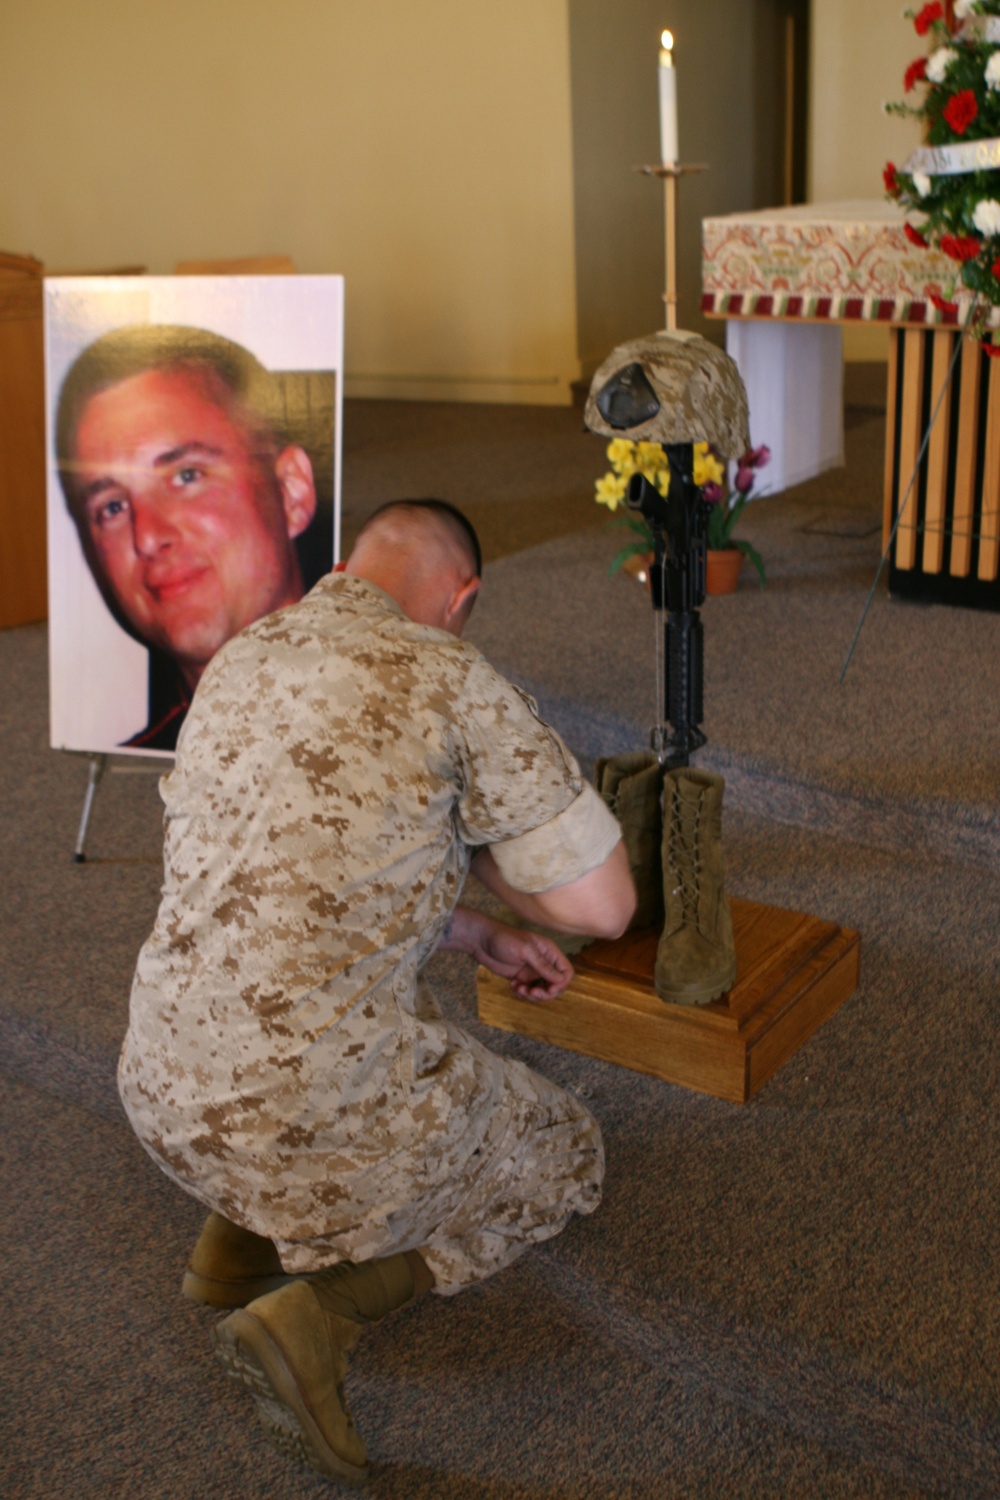 Memorial service for fallen Marine